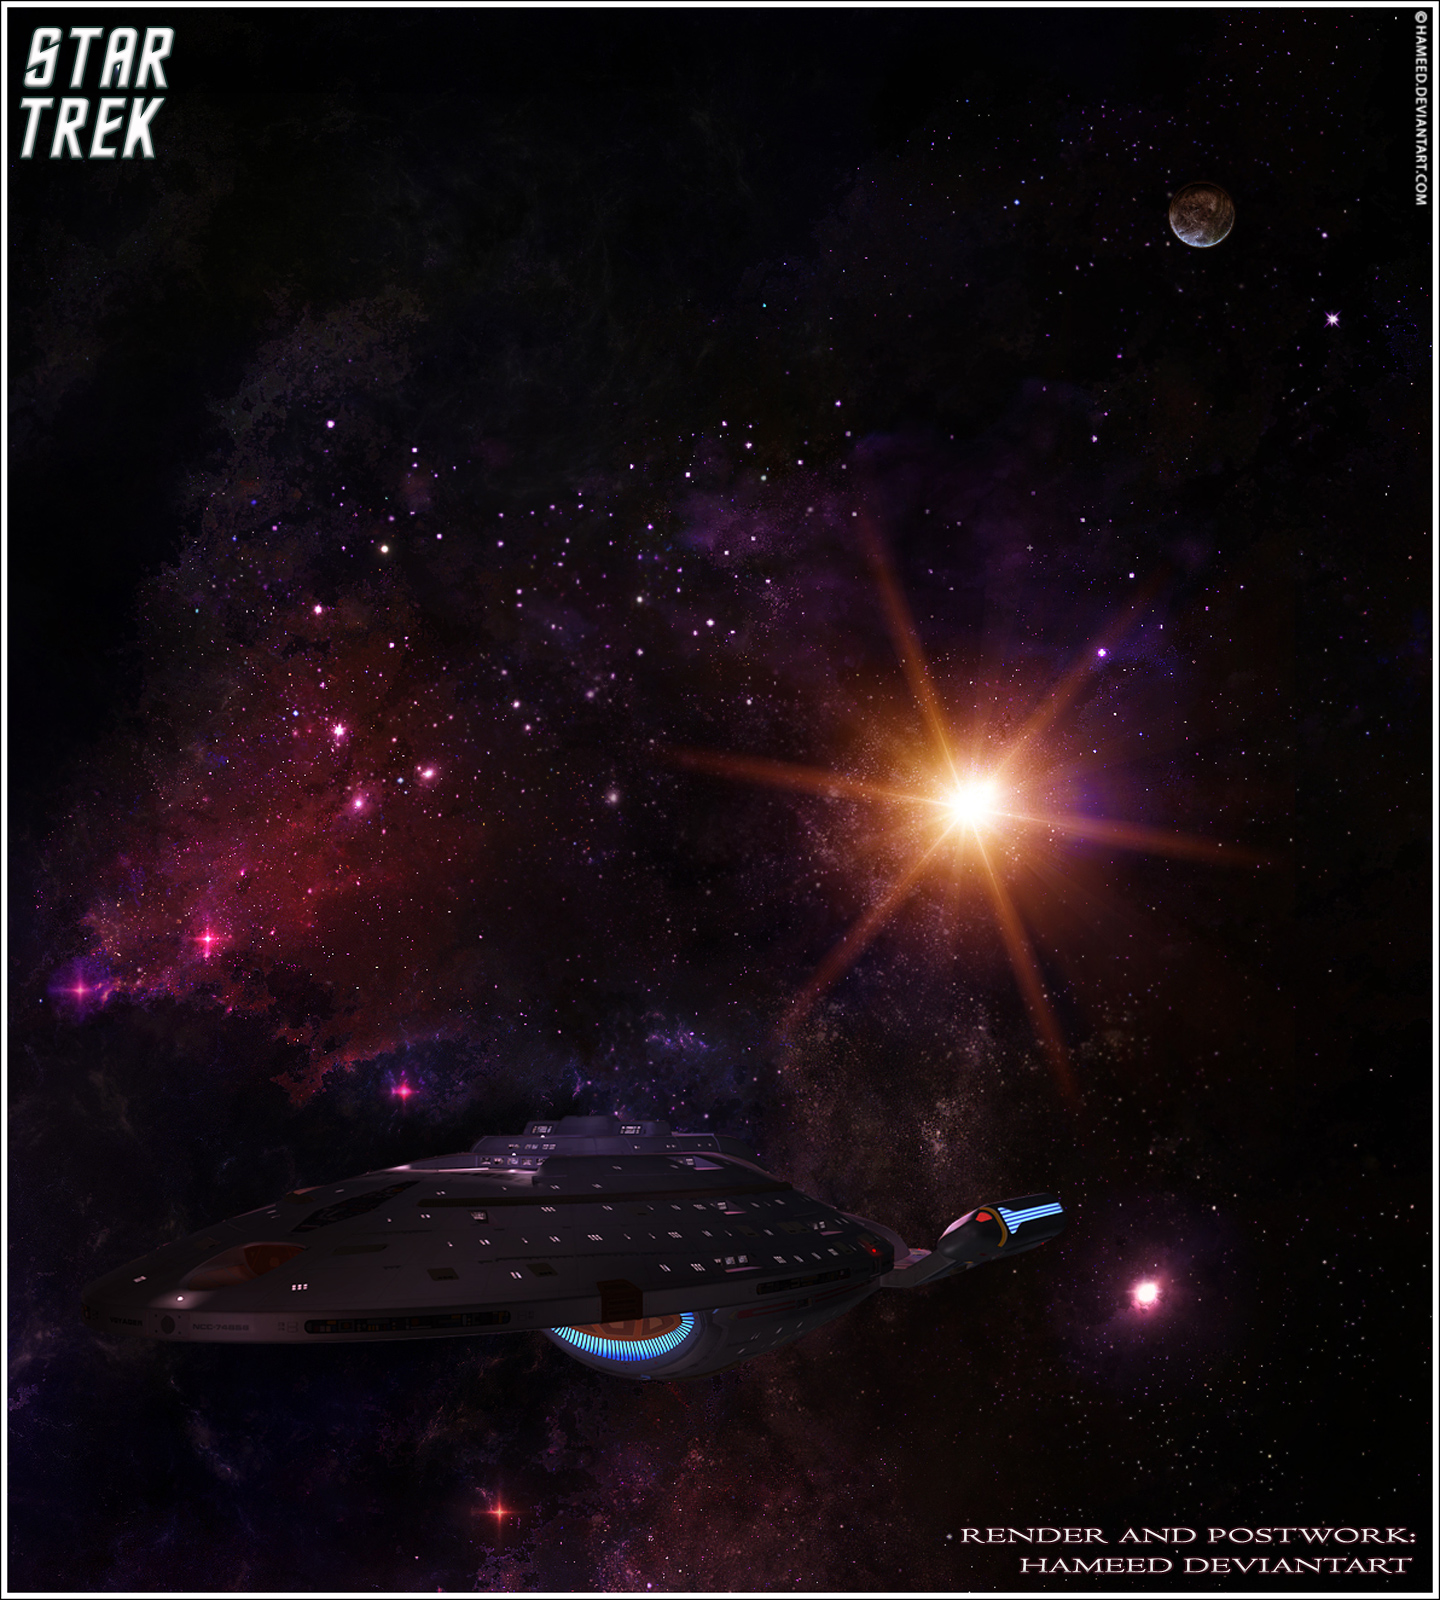 - Star Trek USS Voyager Traveling Through The Stars - free Star Trek computer desktop wallpaper, pictures, images.